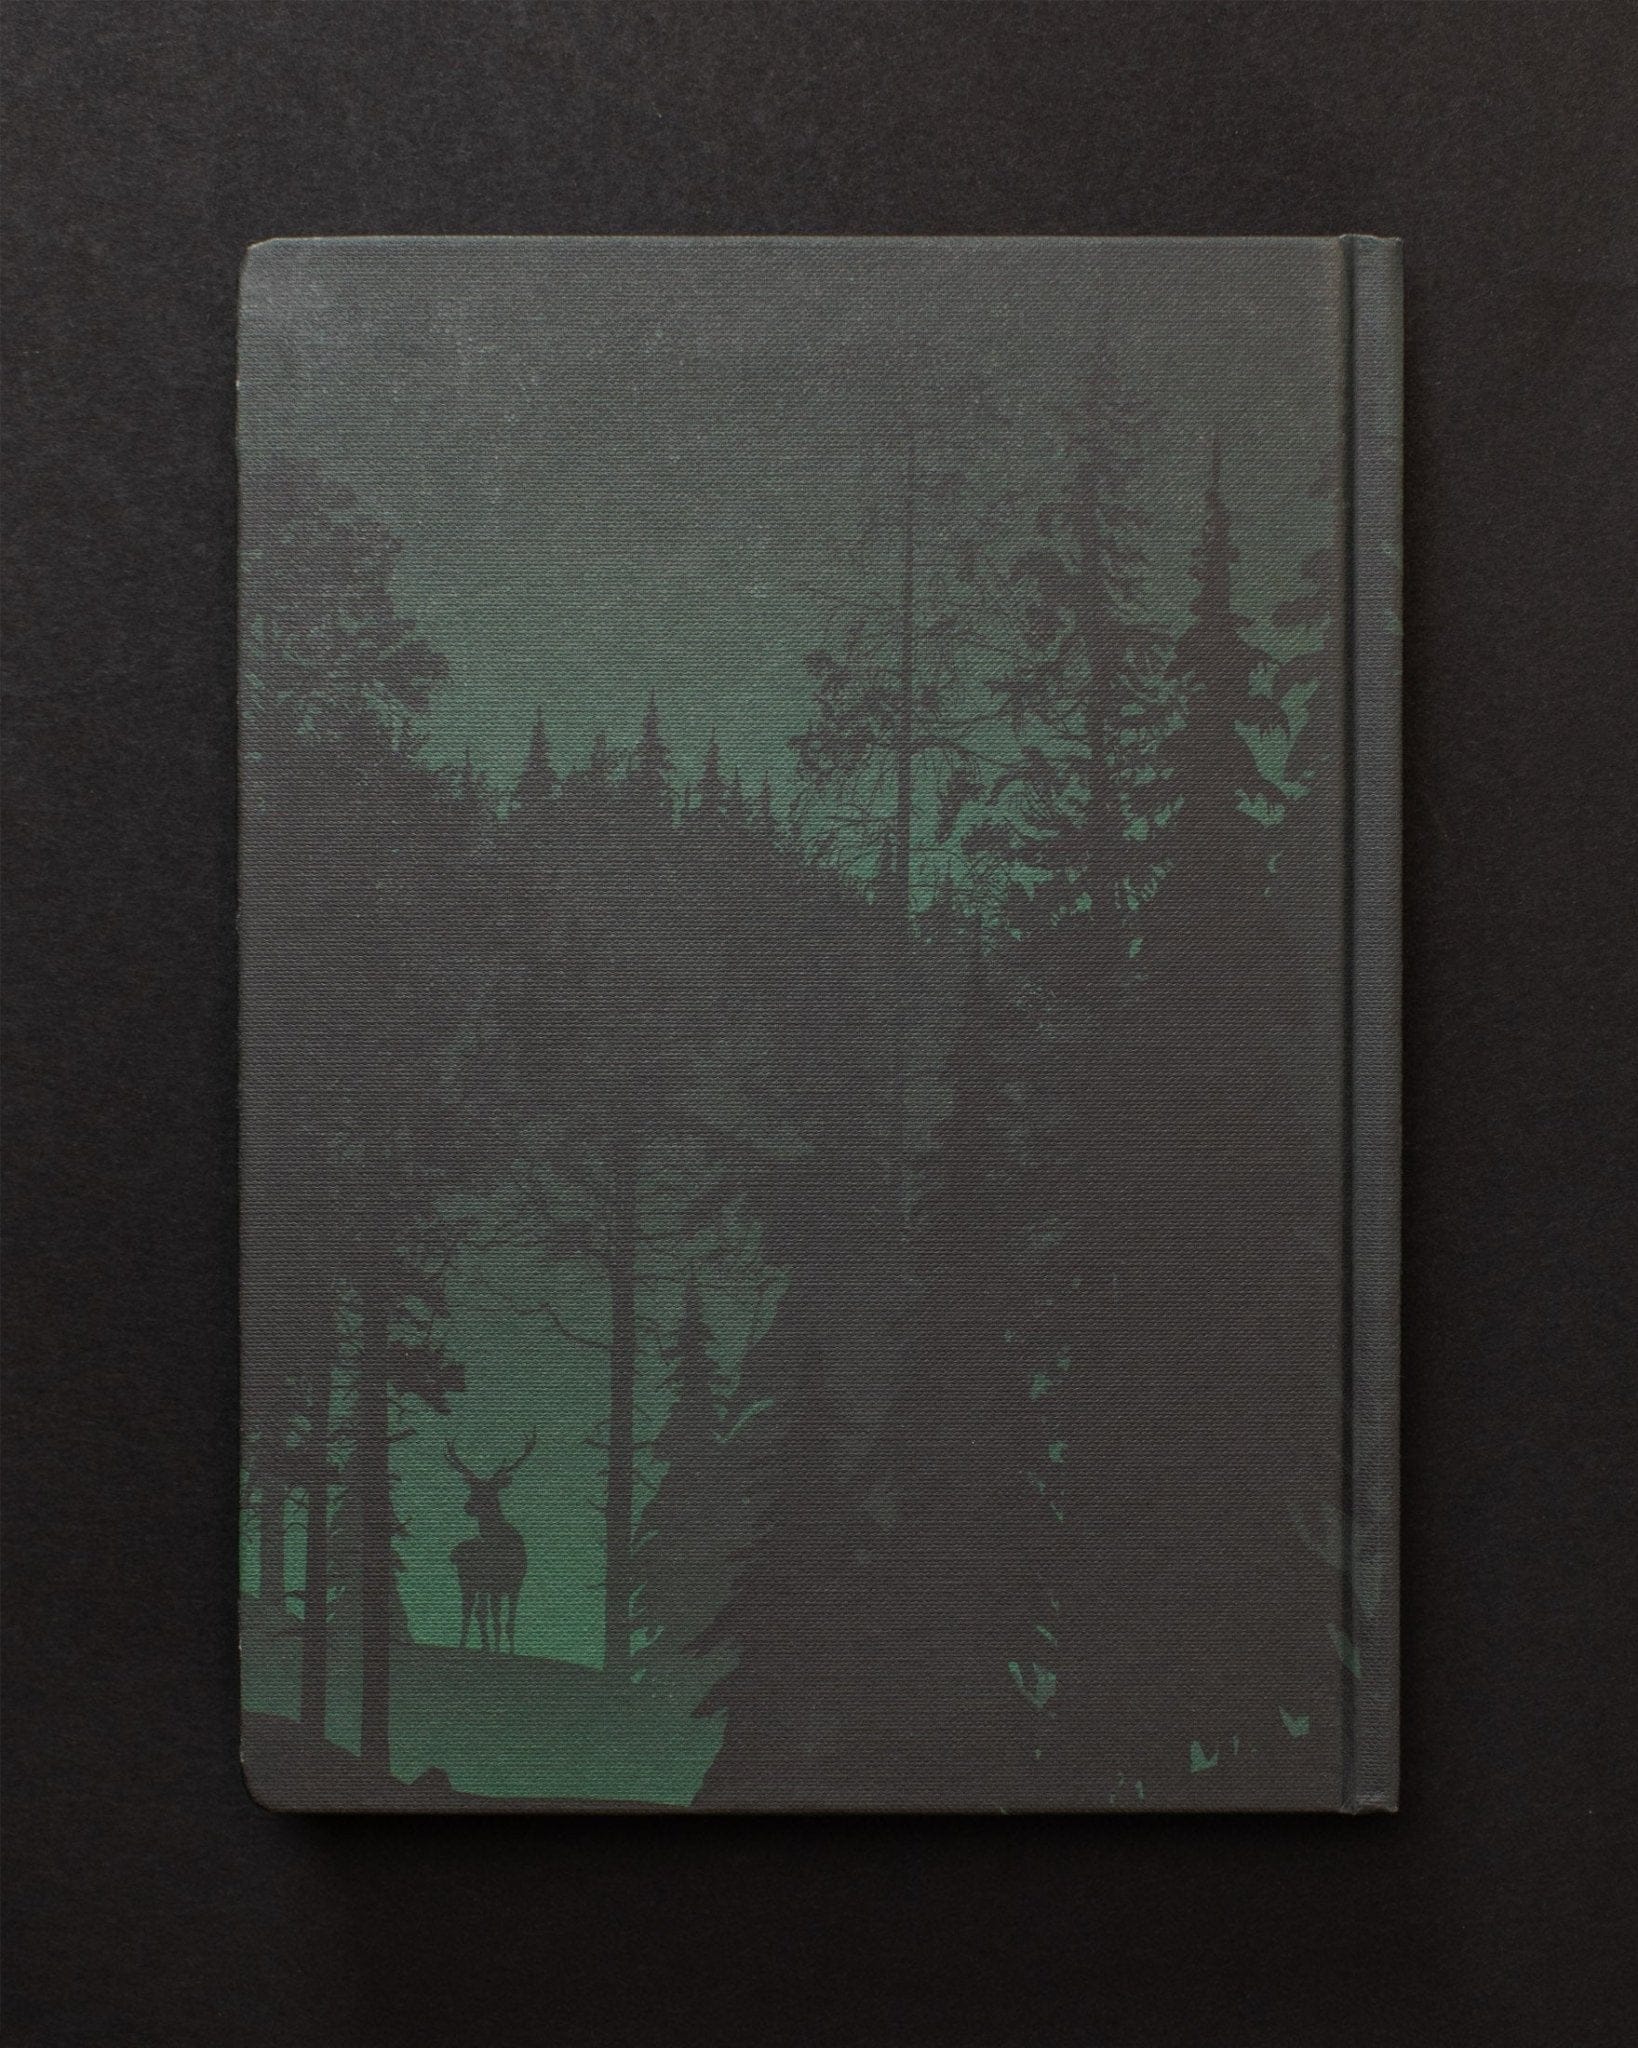 Twilight in the Evergreen Forest Dark Matter Notebook Cognitive Surplus